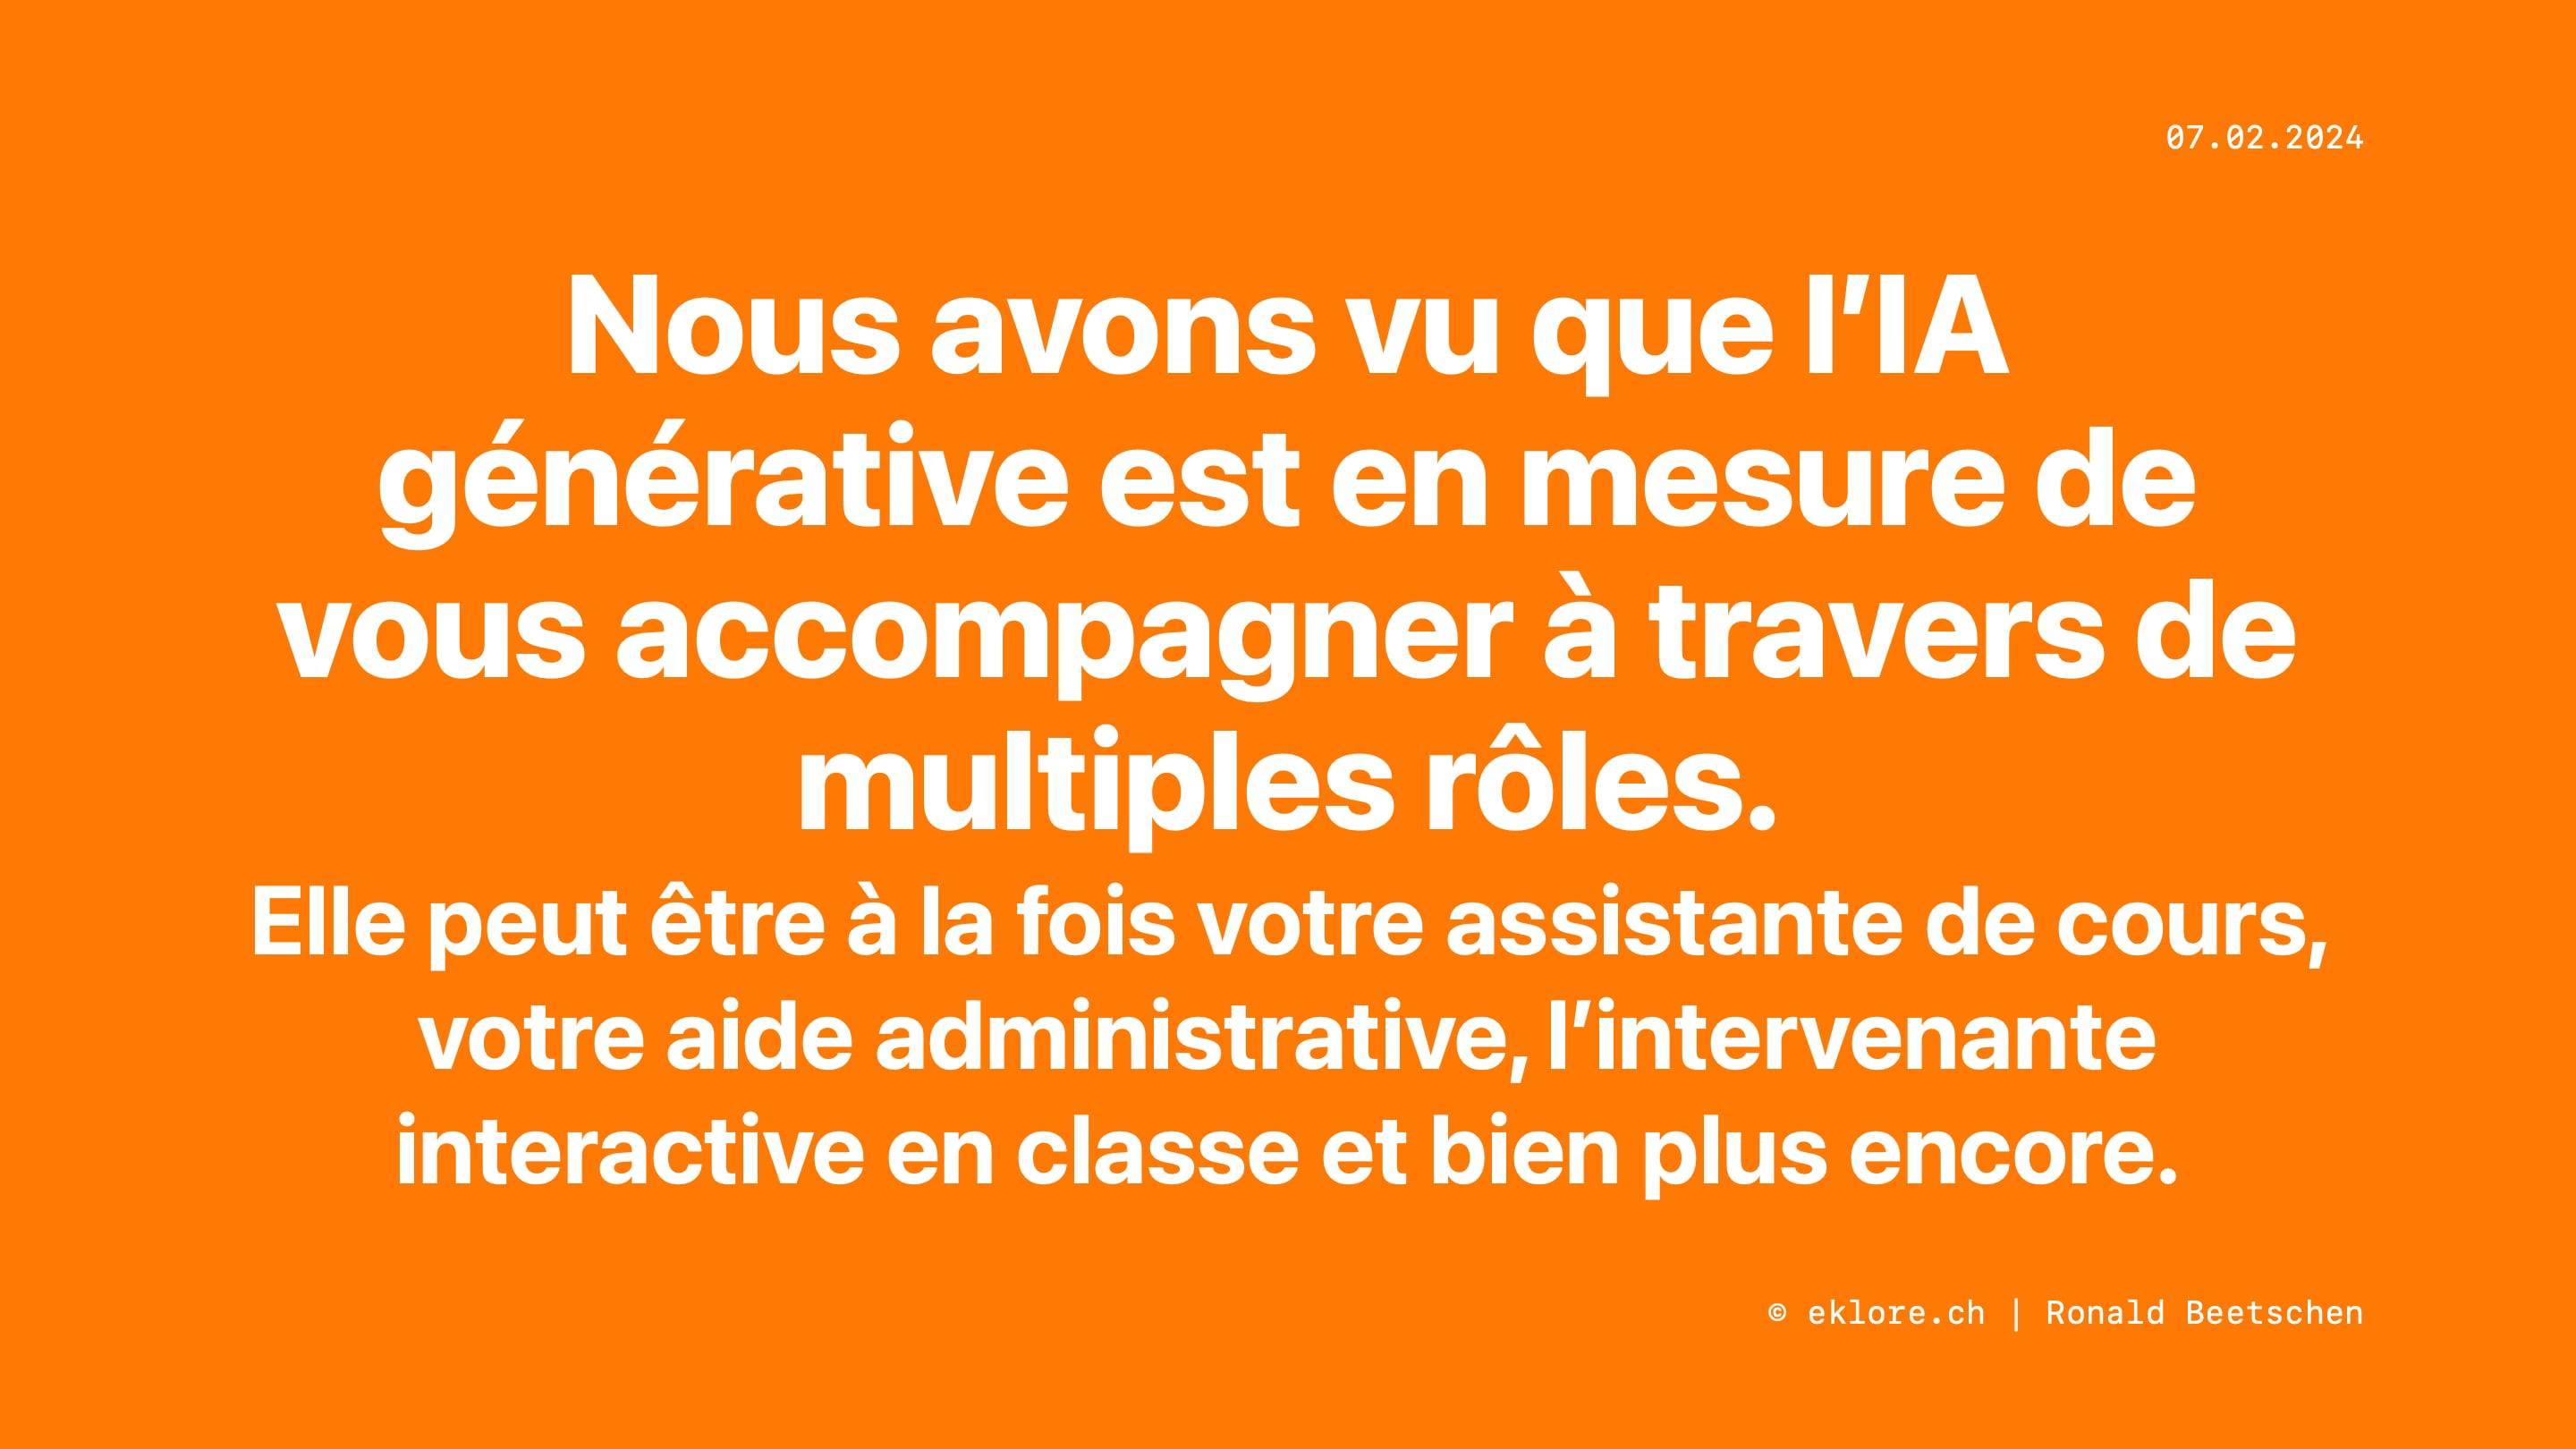 iil-conference-ia-enseignement-slide-59